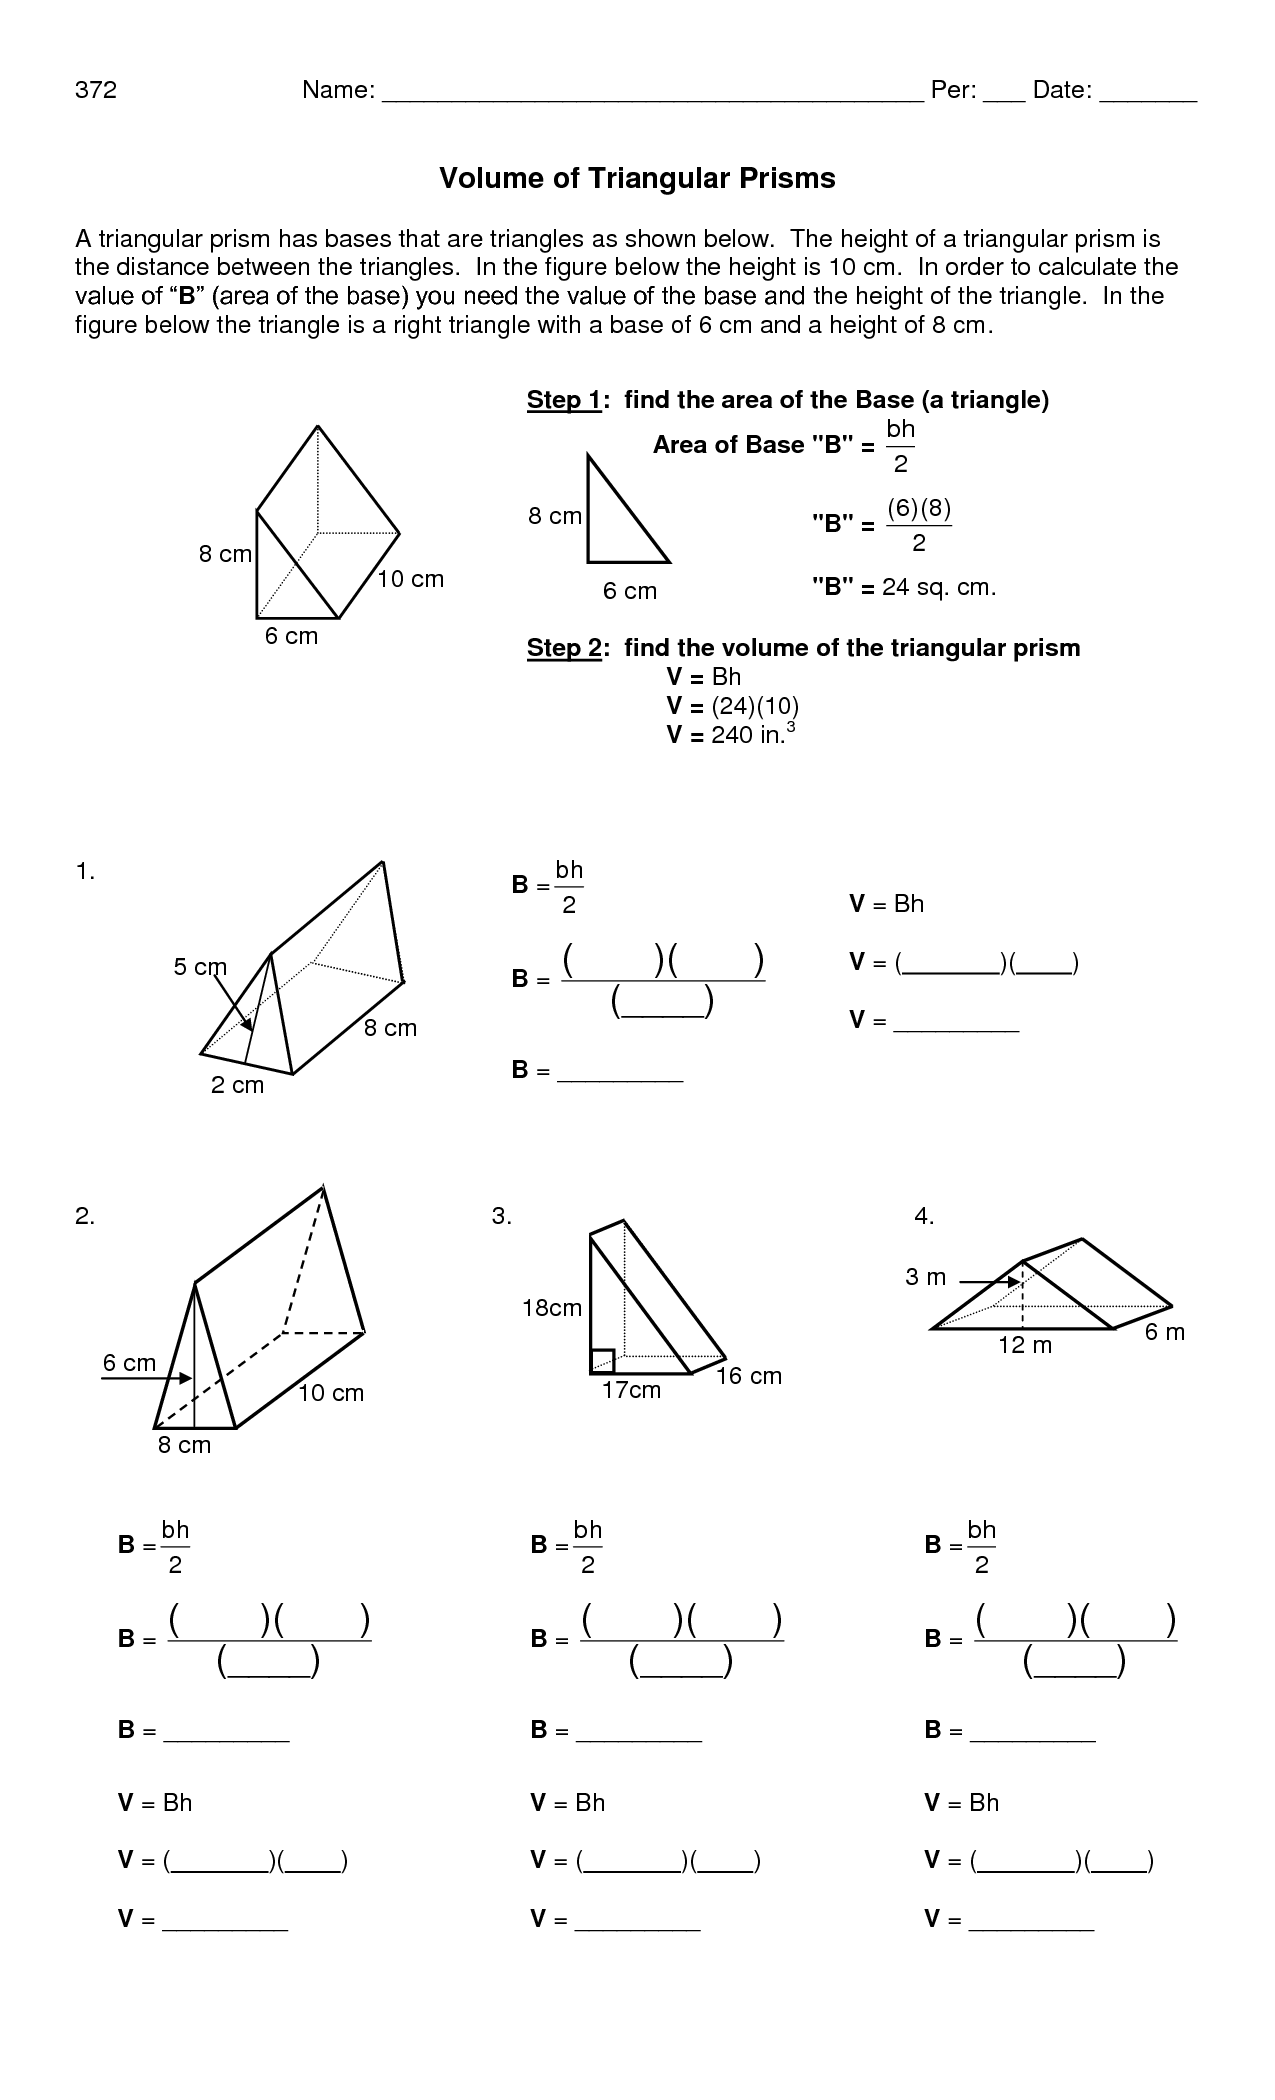 volume-of-triangular-prism-worksheet-upmoon